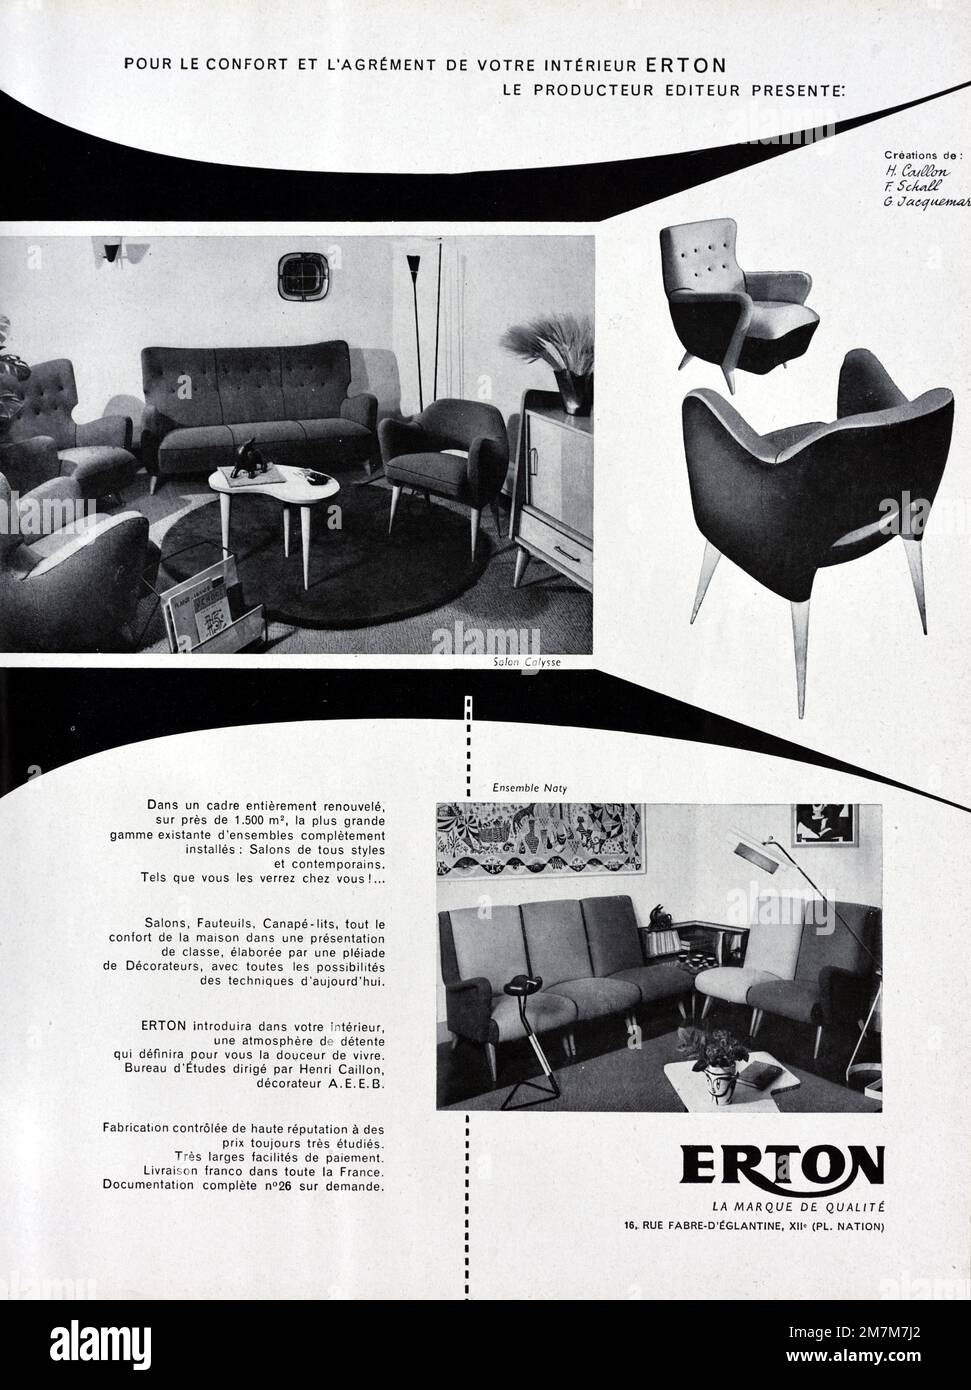 Vintage or Old Advert, Advertisement, Publicity or Illustration for 1950s Erton Furniture Advert Stock Photo